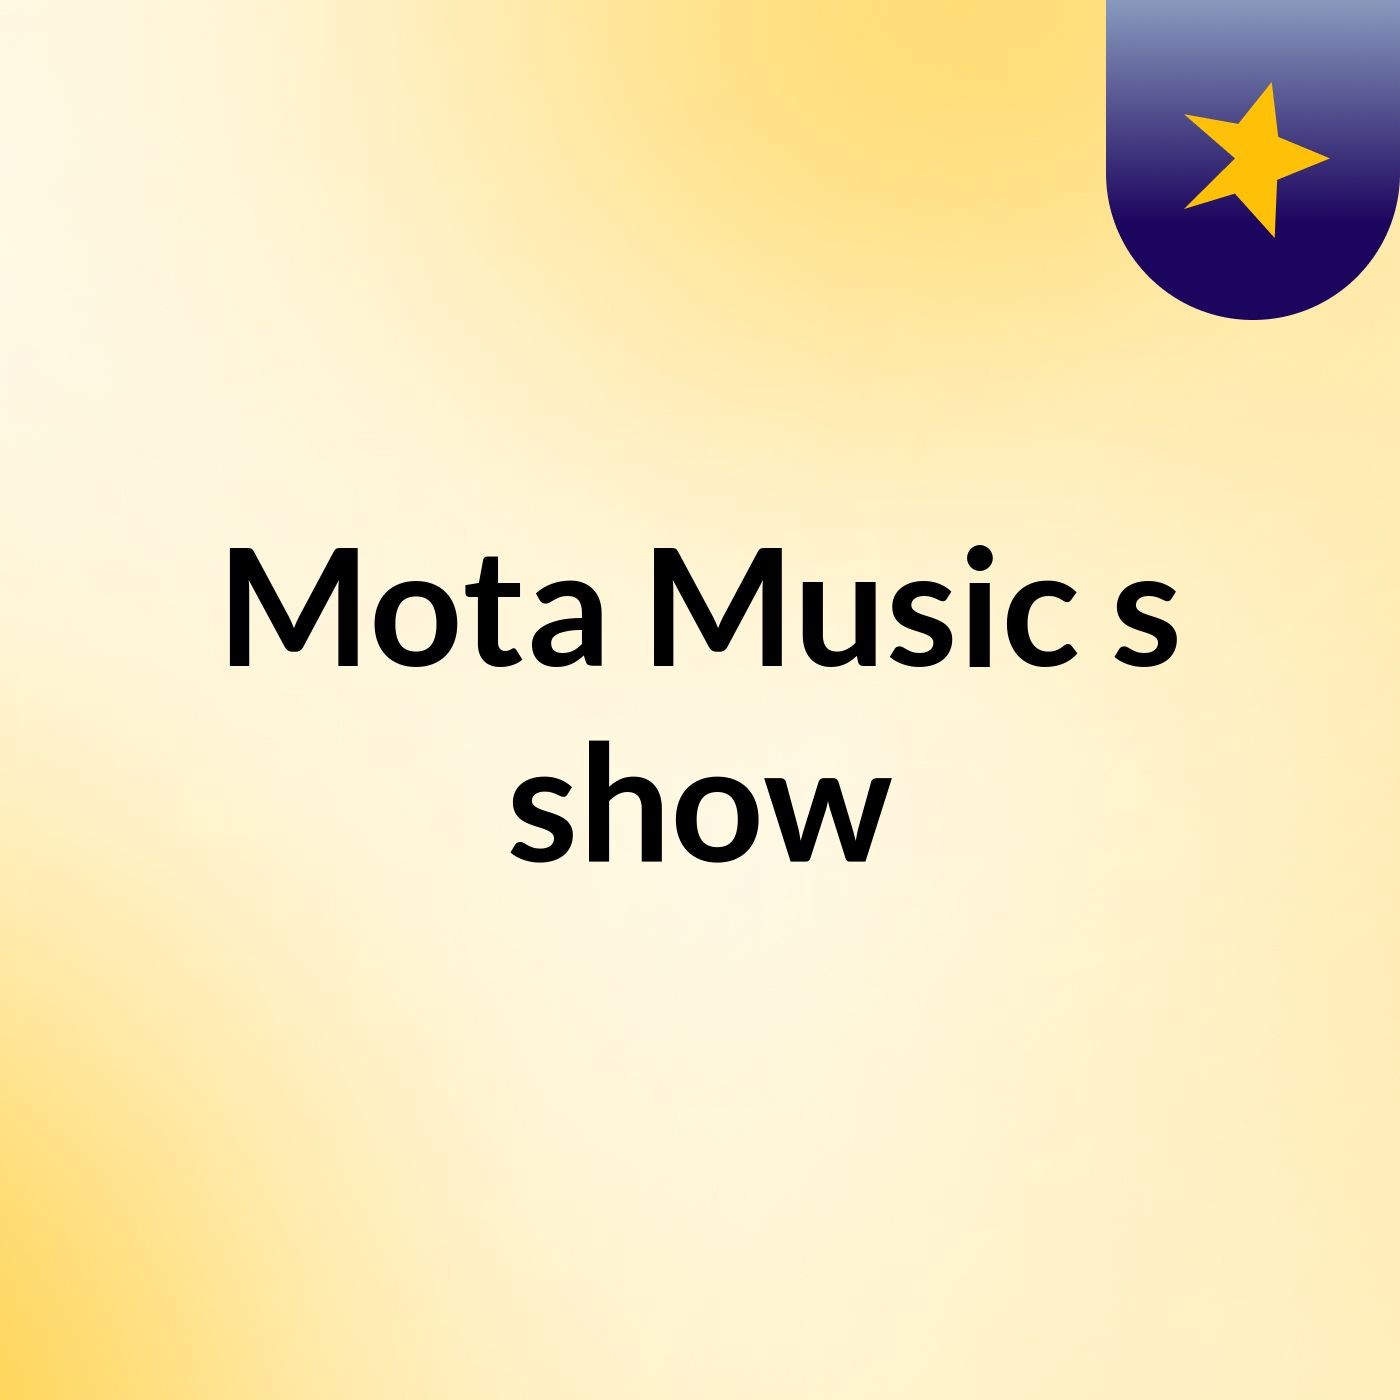 Mota Music's show